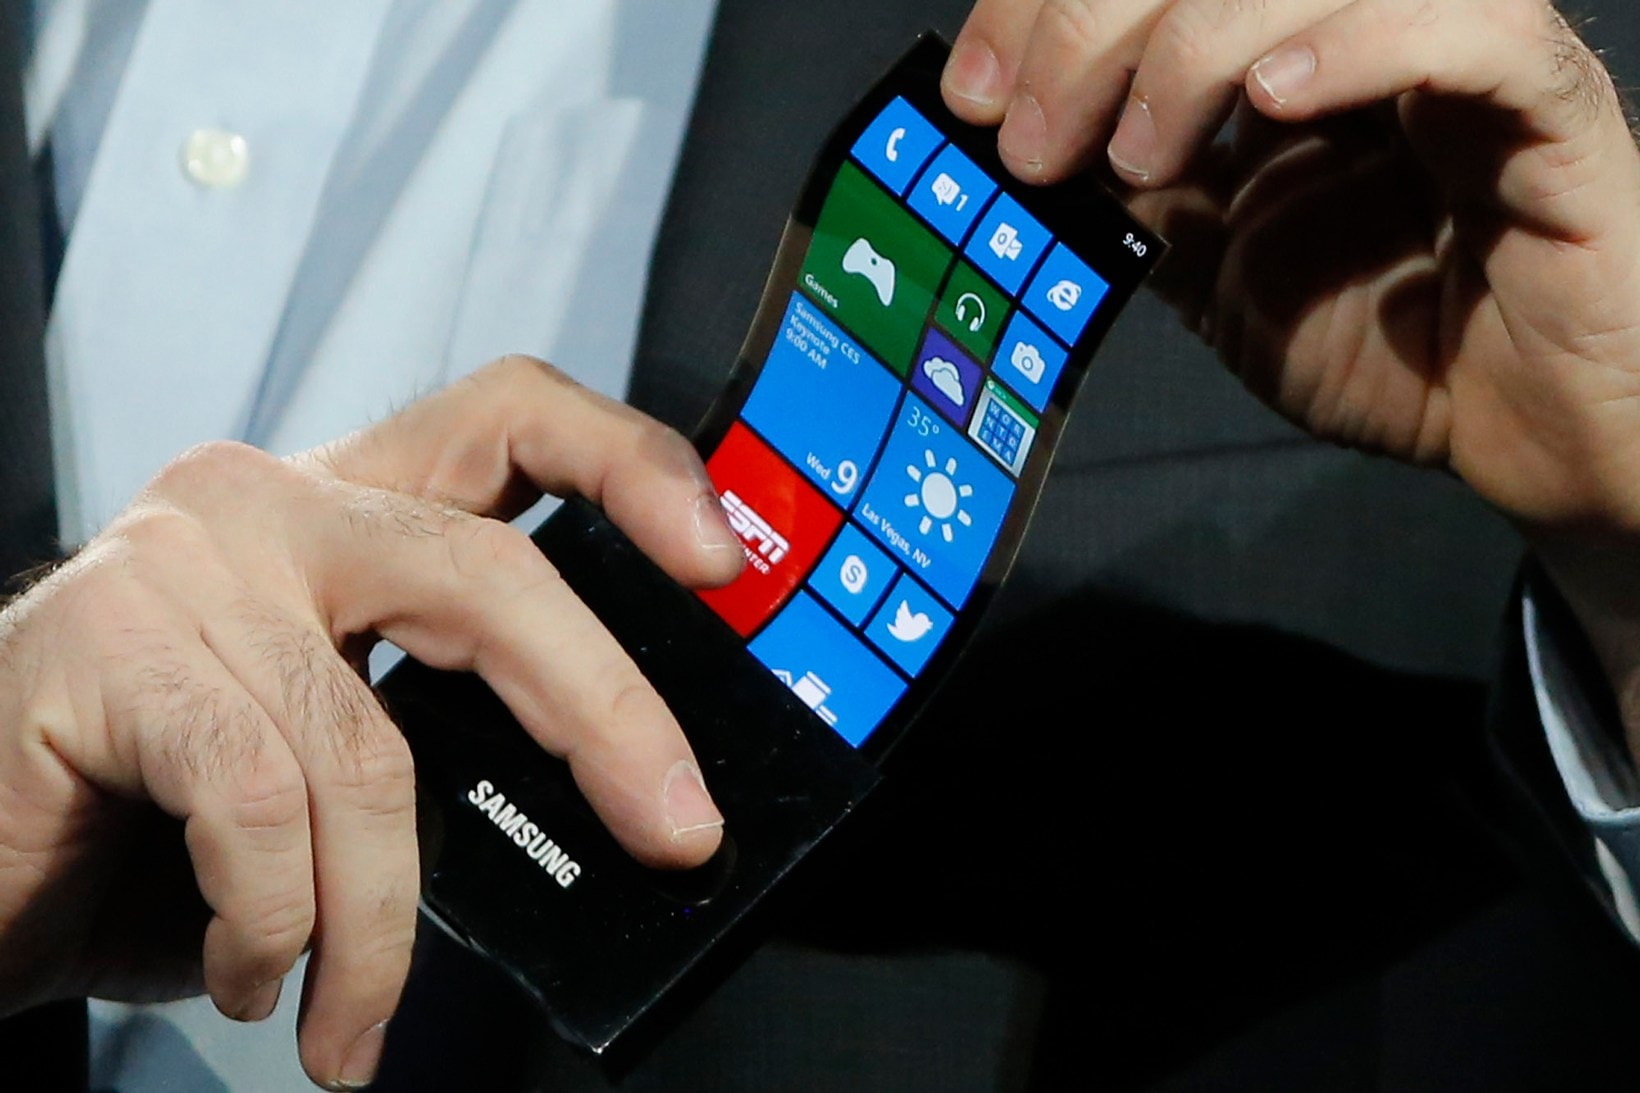 Samsung Foldable Smartphone Patent